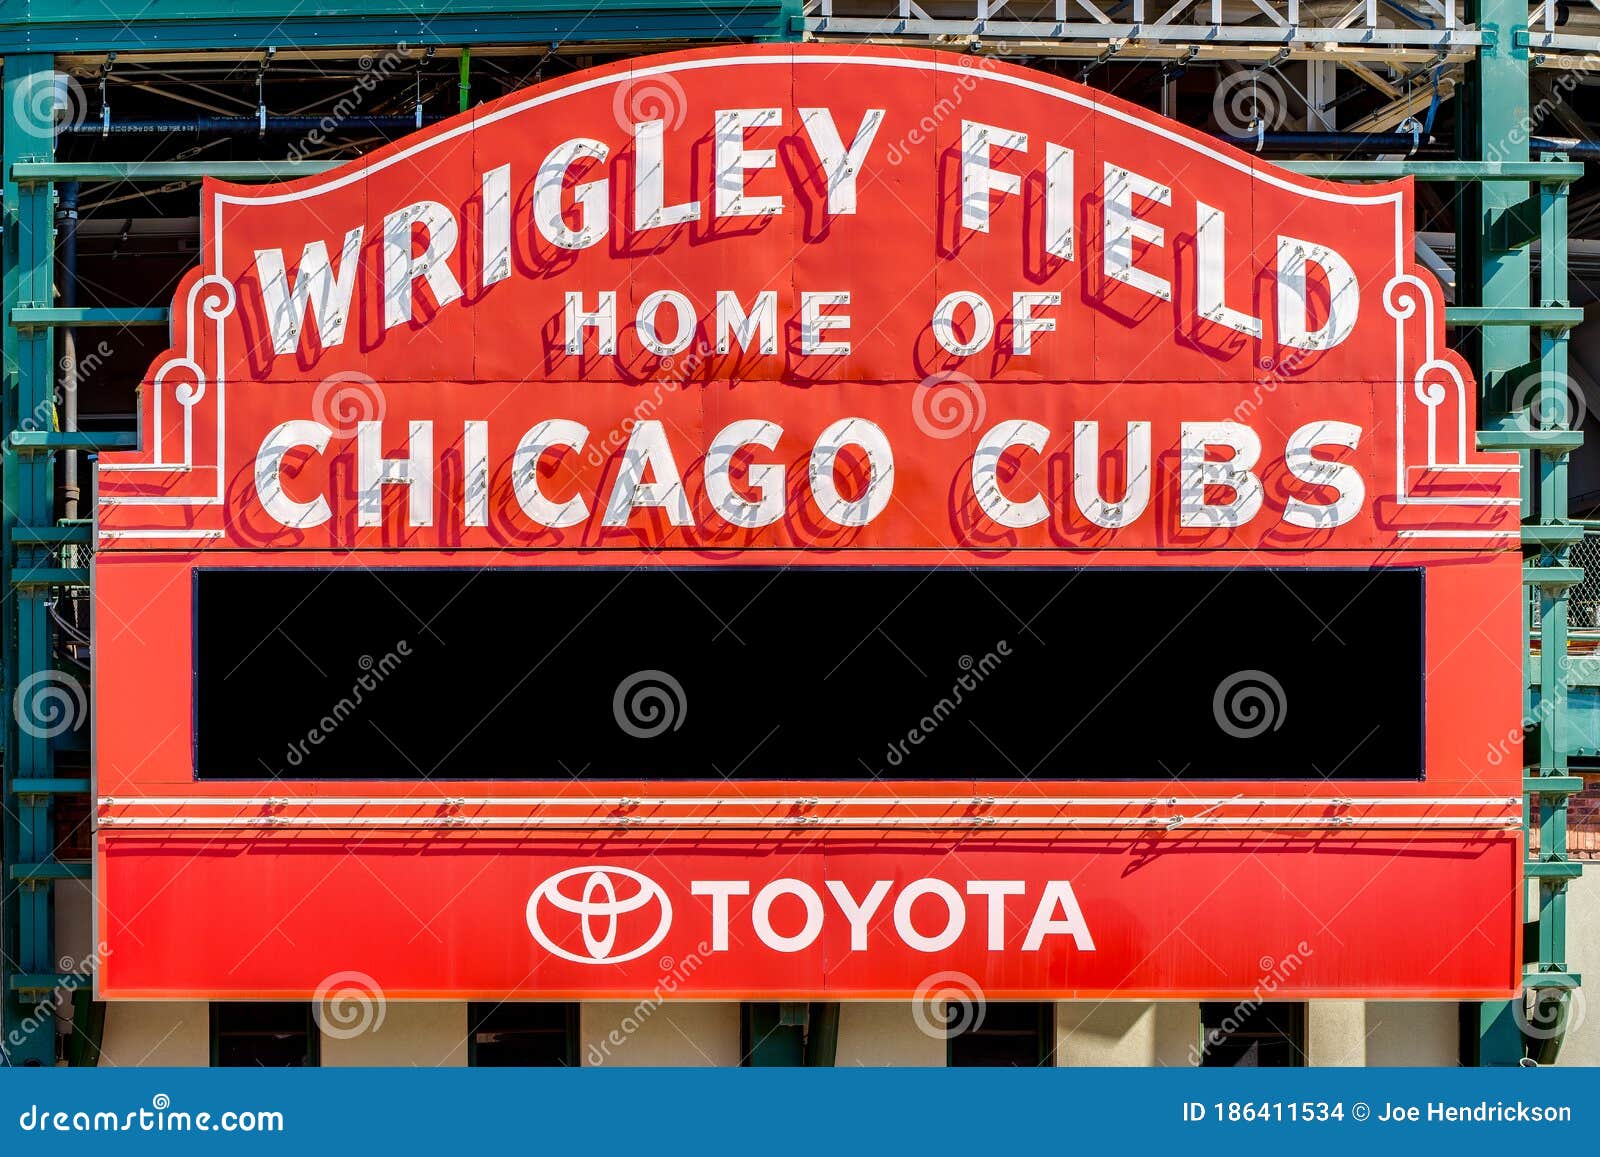 wrigley-field-entrance-sign-at-night - Baseball Brew Crew